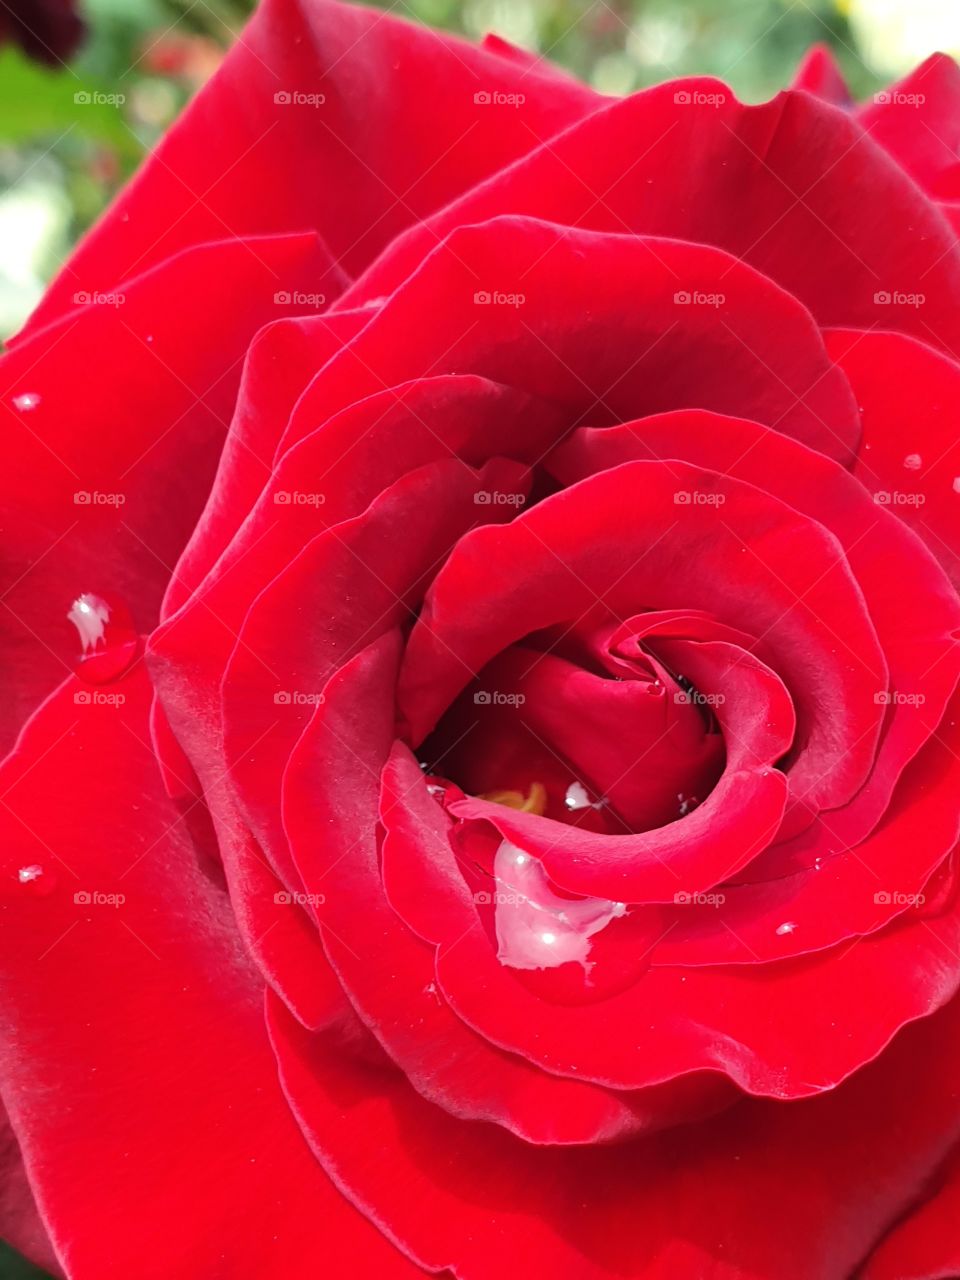 velvet red rose closeup with rain drops